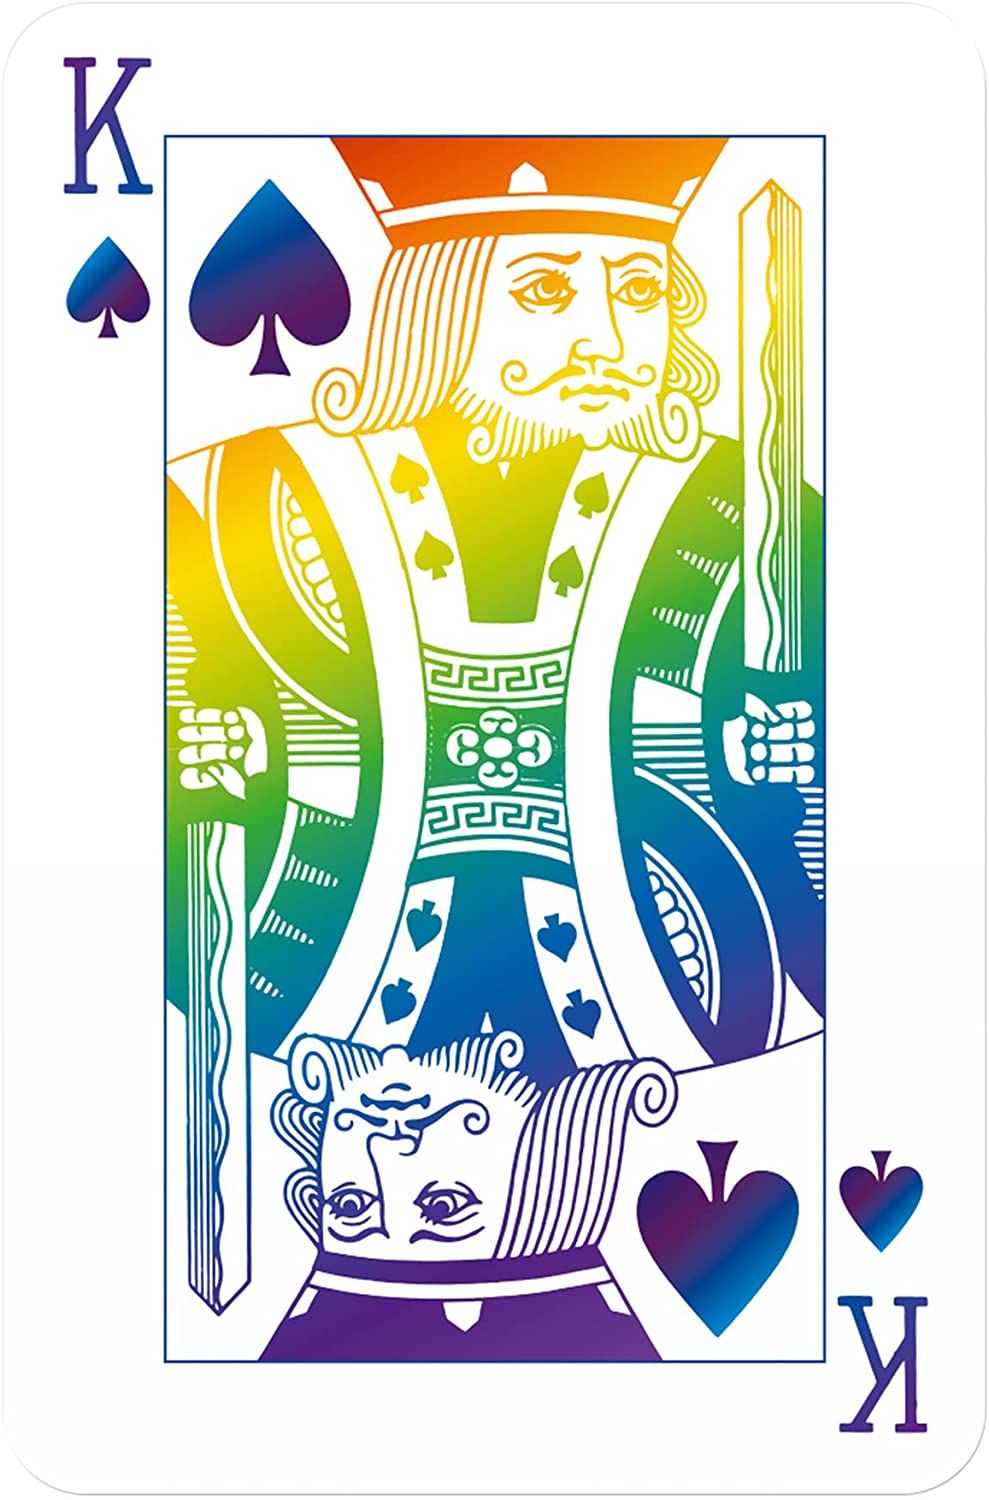 Waddingtons - Rainbow Playing Cards